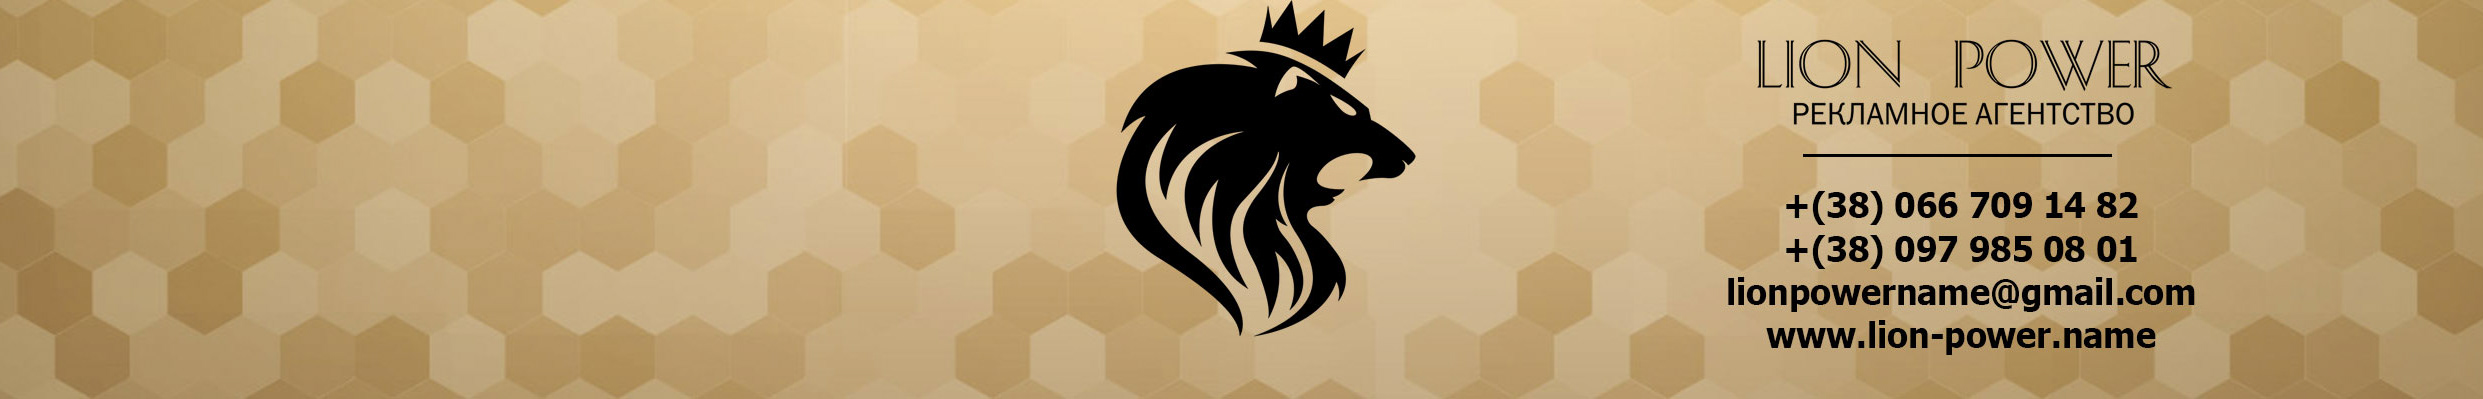 Lion Power's profile banner